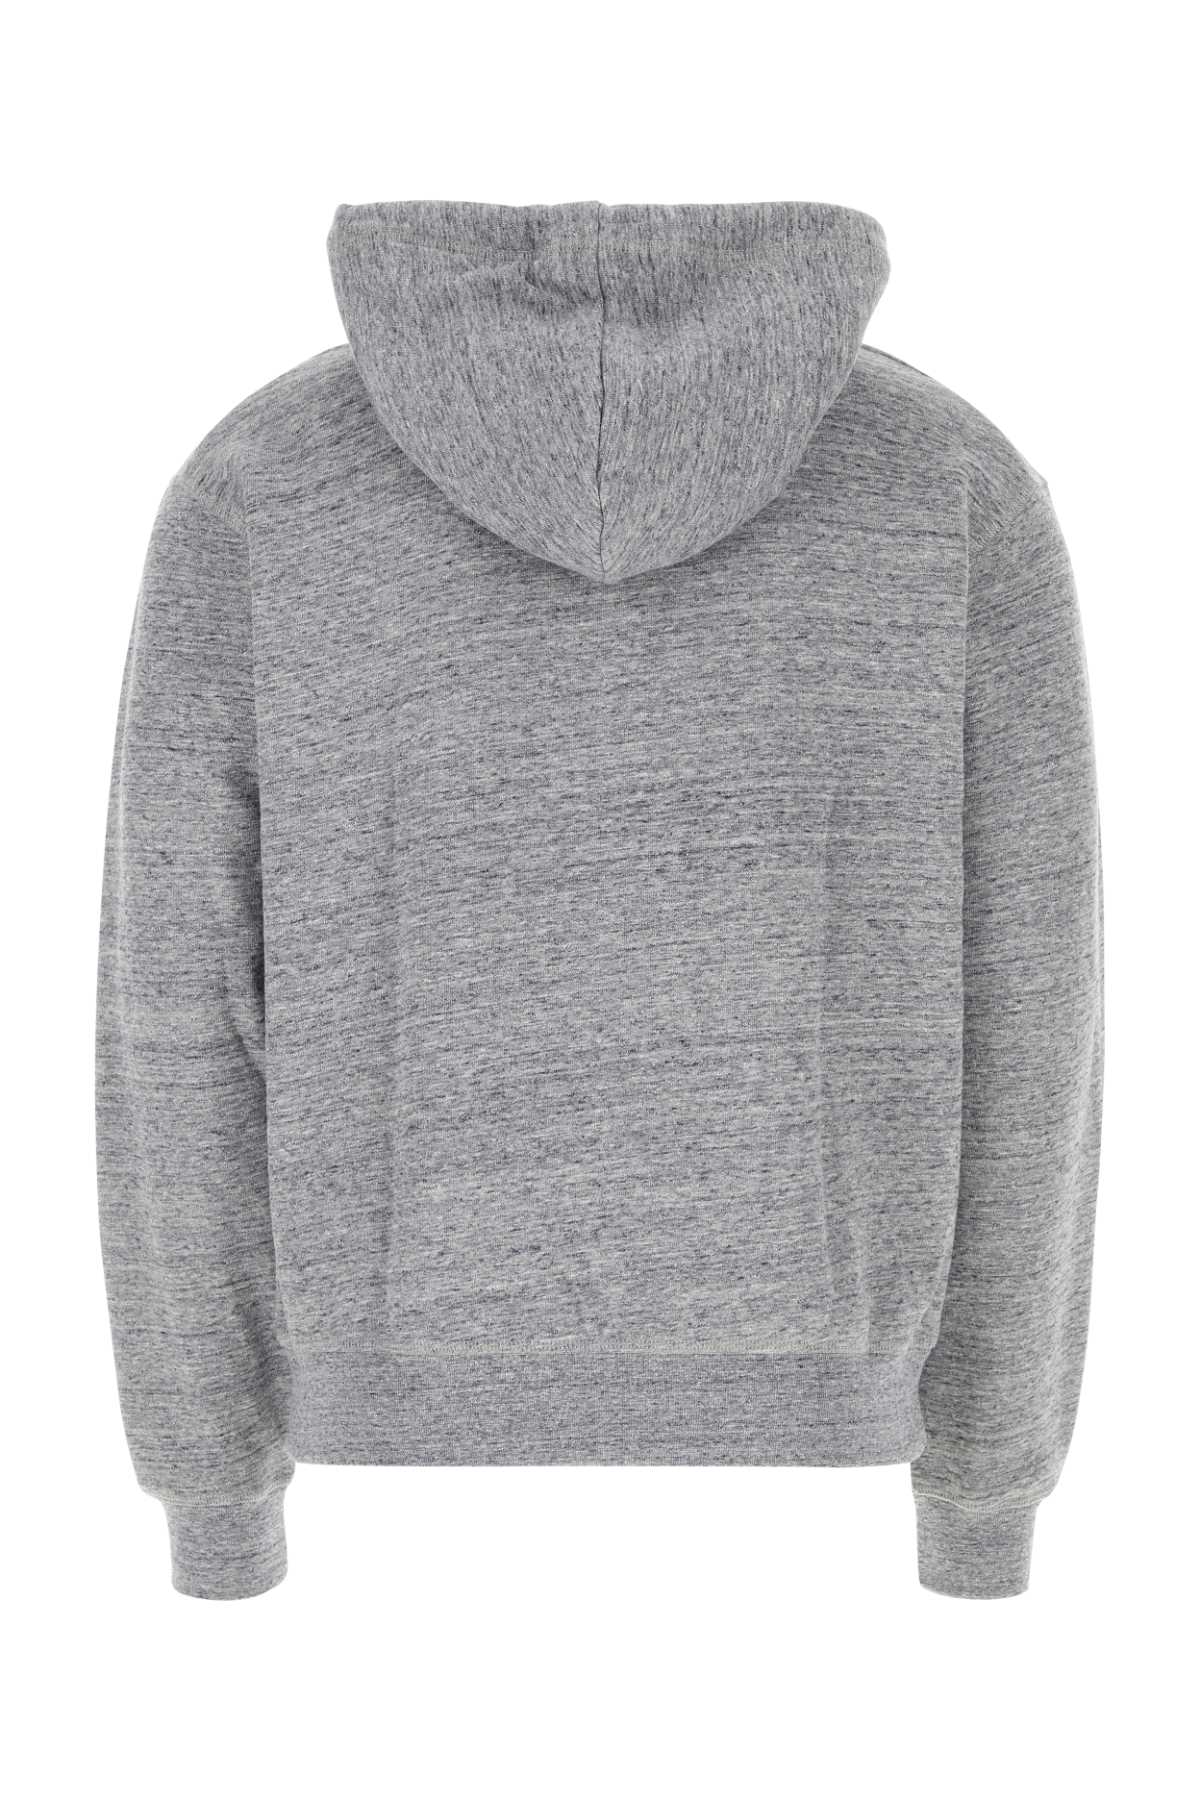 Dsquared2 Melange Grey Cotton Sweatshirt In Greymelange